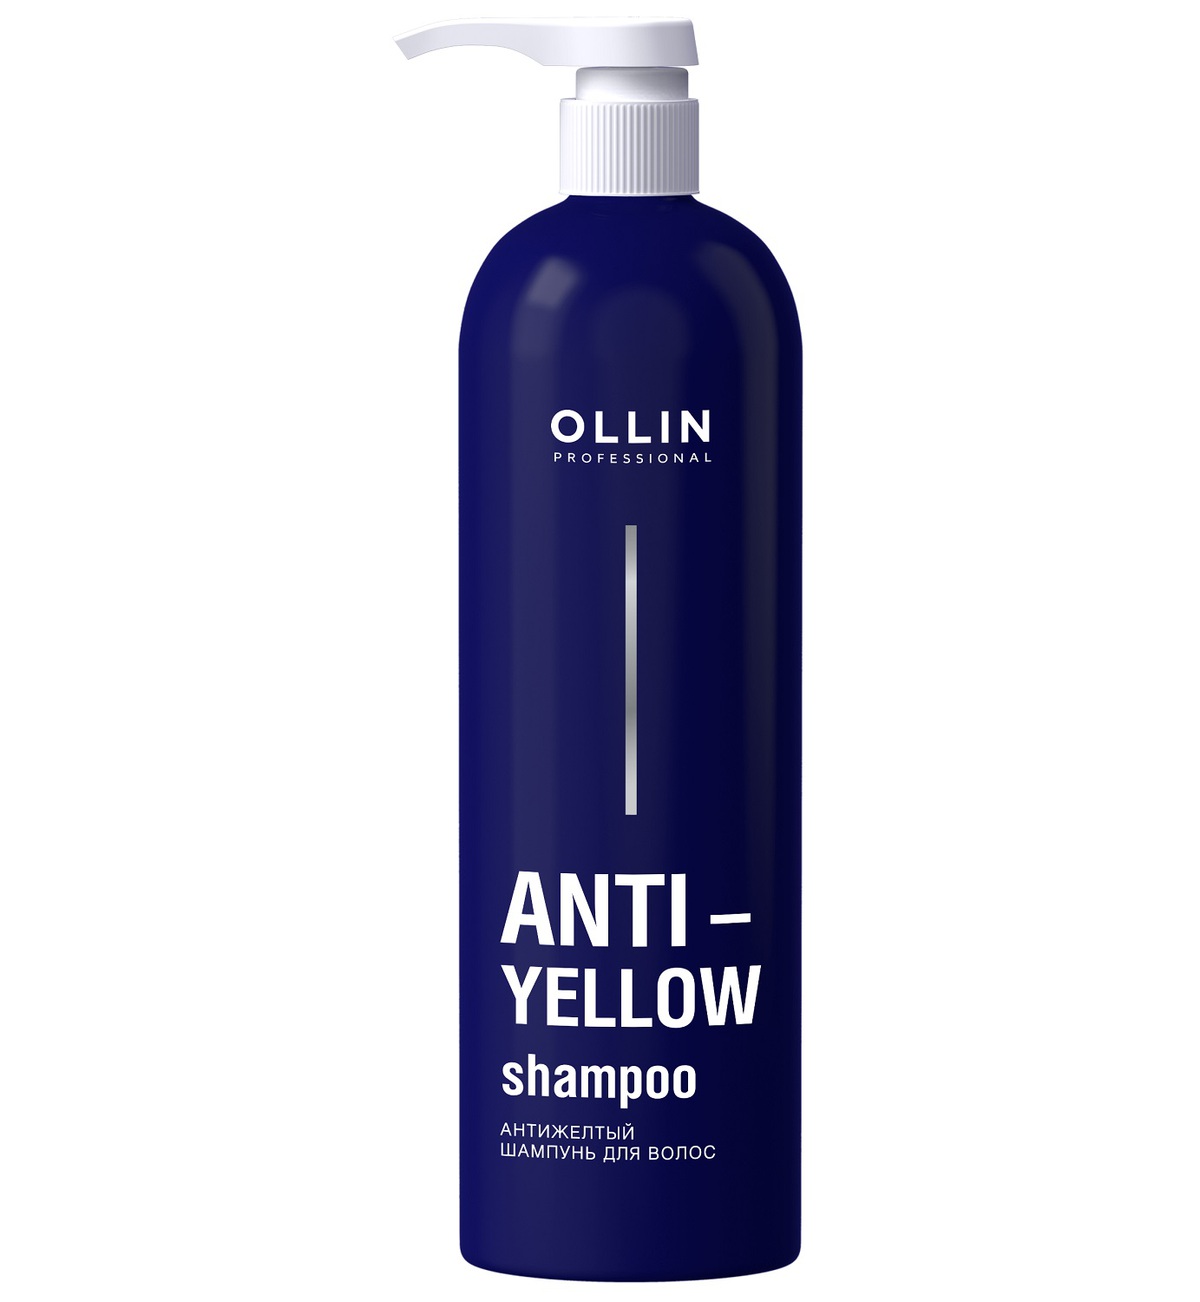 Ollin Professional Антижелтый шампунь для волос Anti-Yellow Shampoo, 500 мл (Ollin Professional, Anti-Yellow) антижелтый шампунь для волос anti yellow ollin 250 мл